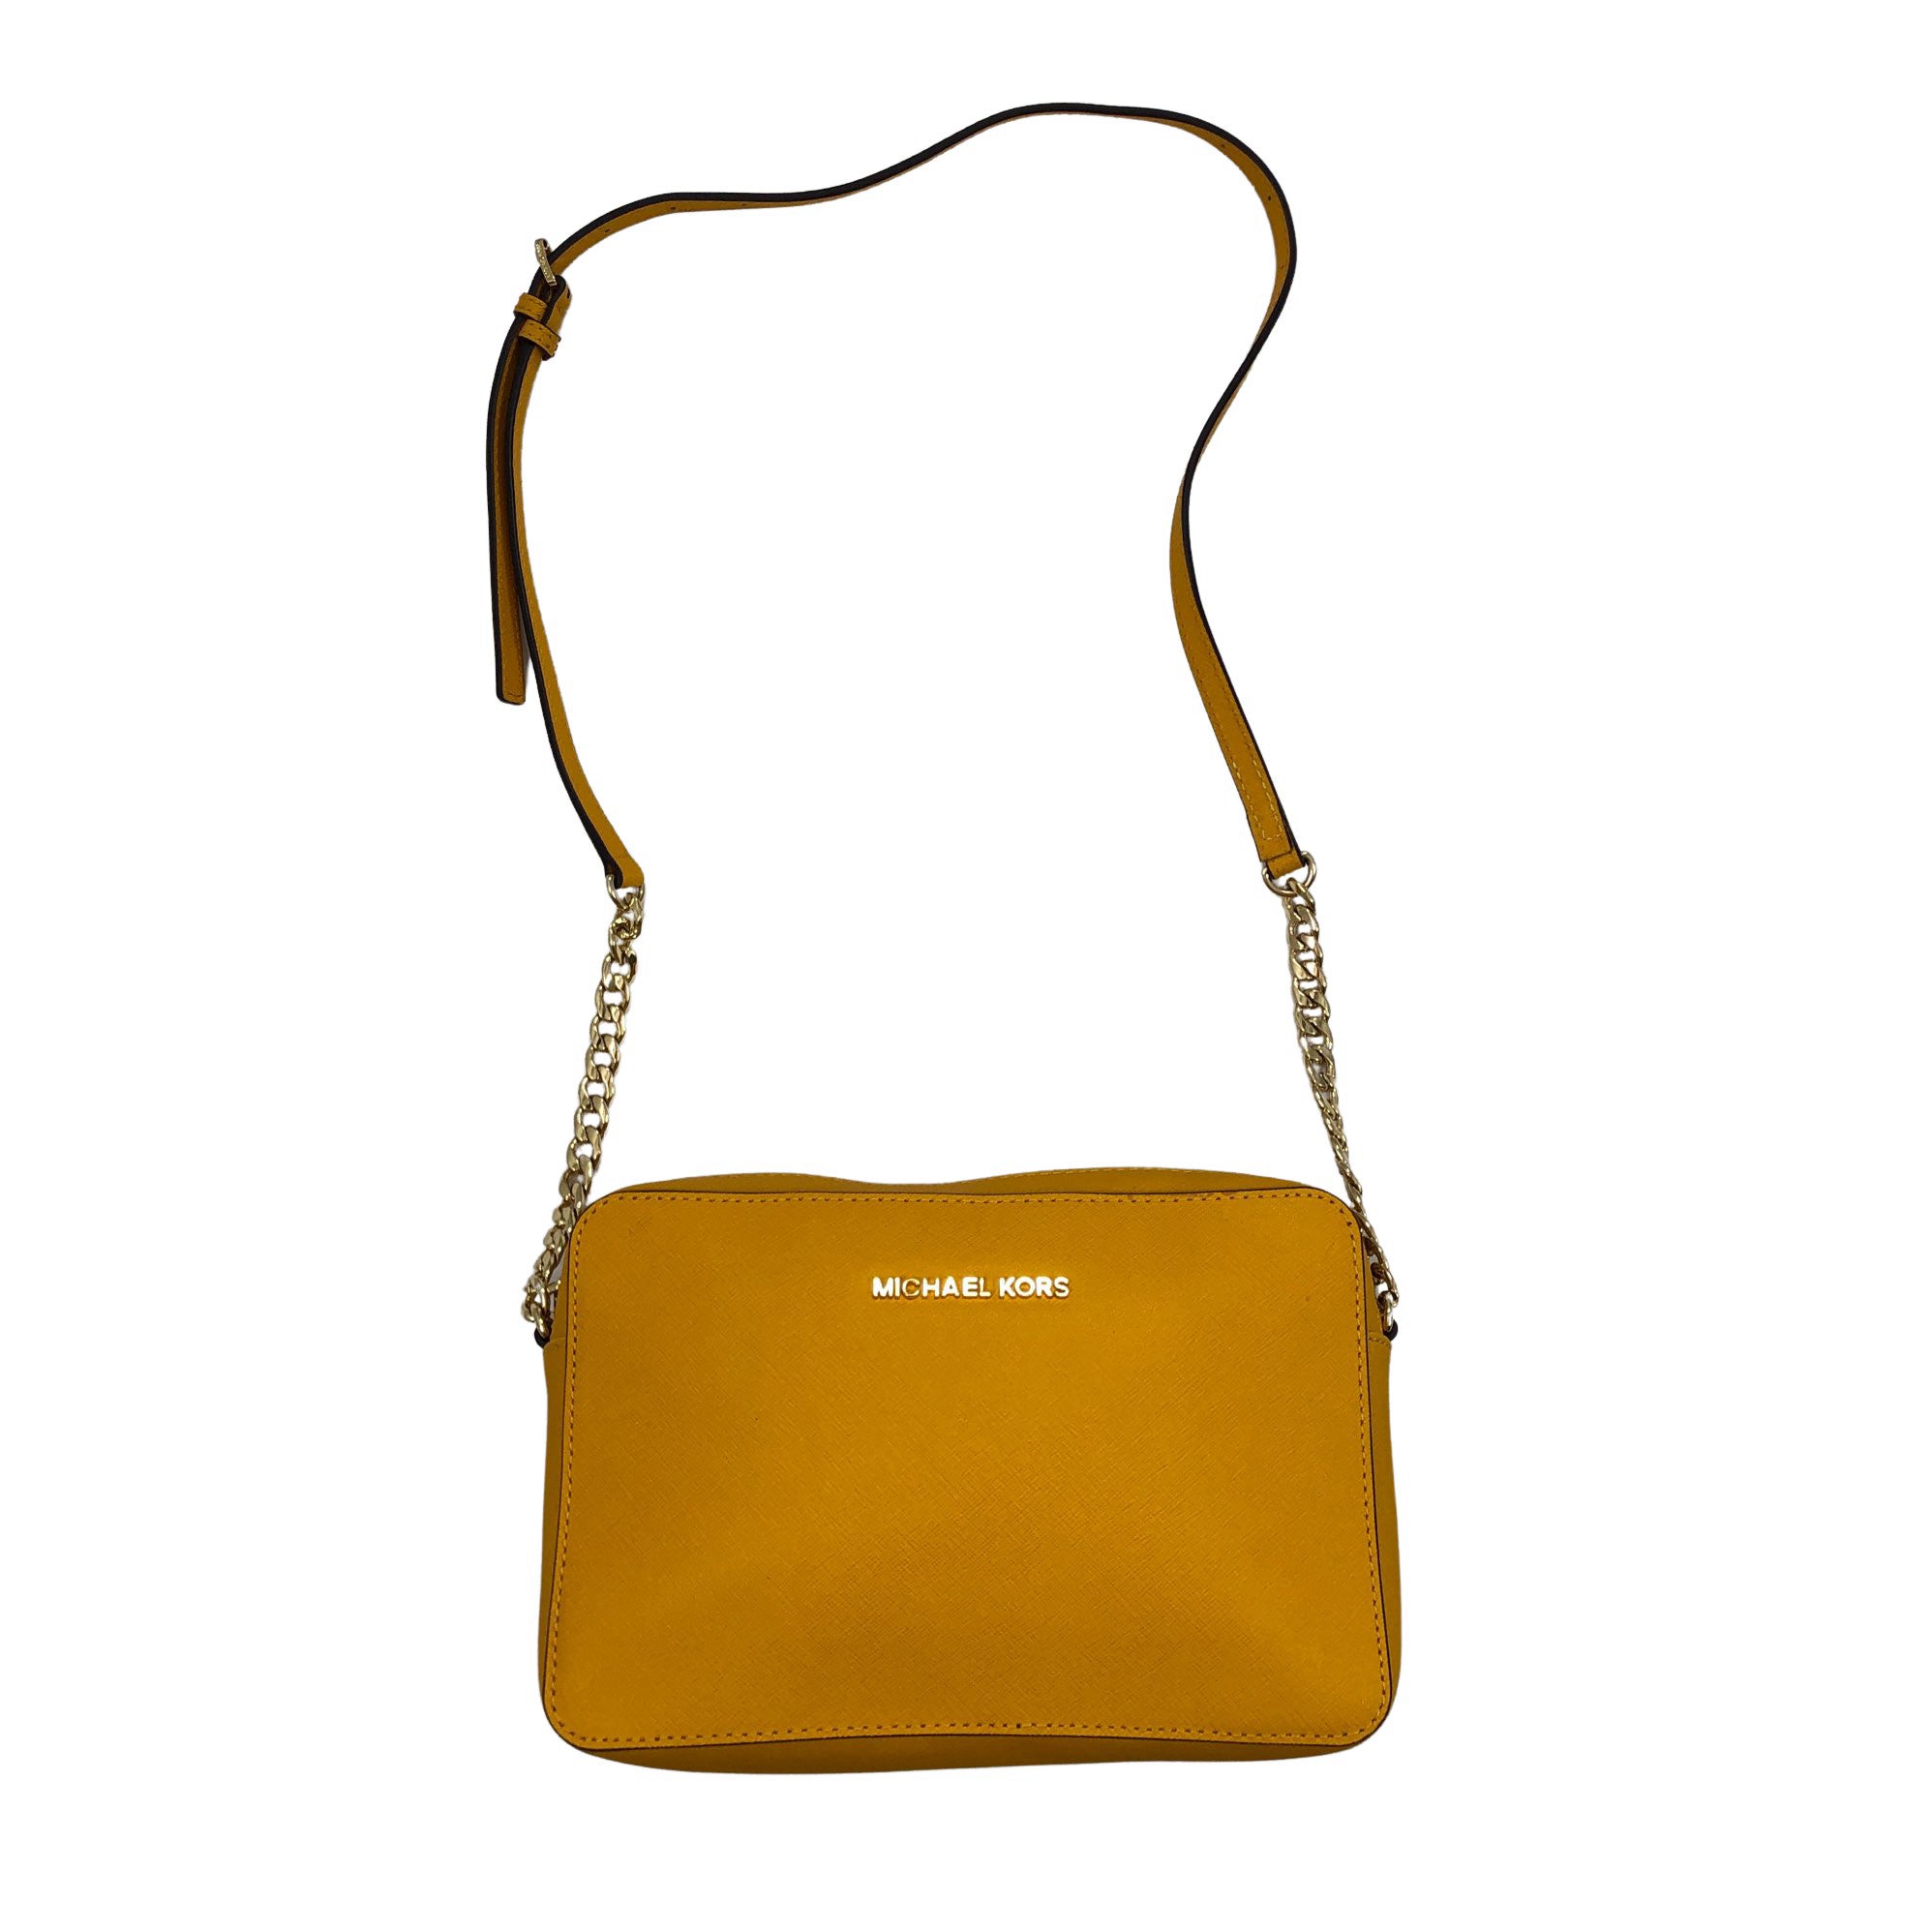 Click to see 10 Great MICHAEL KORS Handbags in Bold Colors Yellow Handbag   Michael Kors Bag  Designer Handbags    Bolso amarillo Bolsas michael  kors Bolso